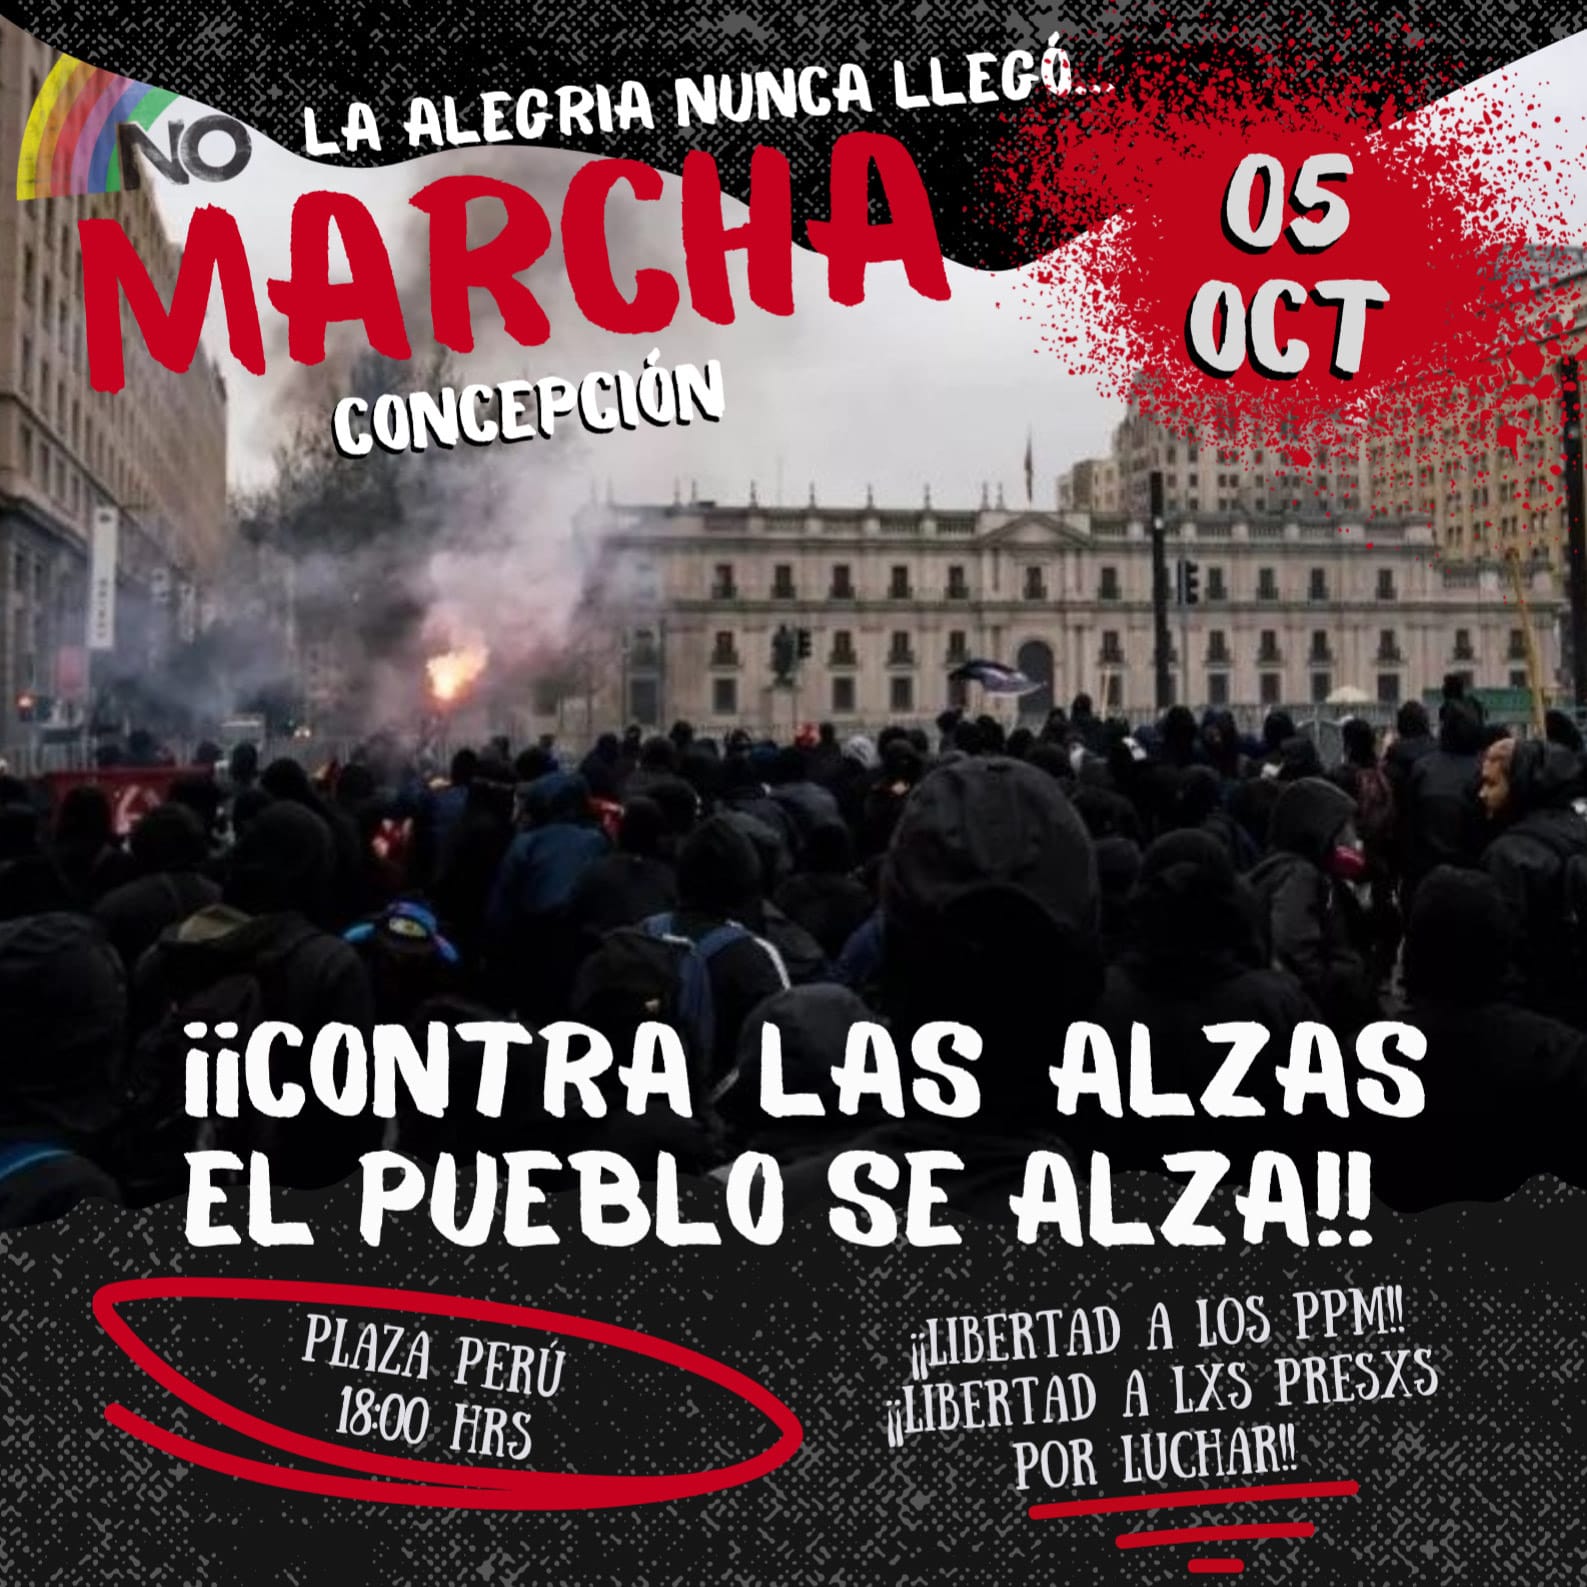 CHILE. CONVOCAN A PROTESTA POPULAR CONTRA LAS ALZAS